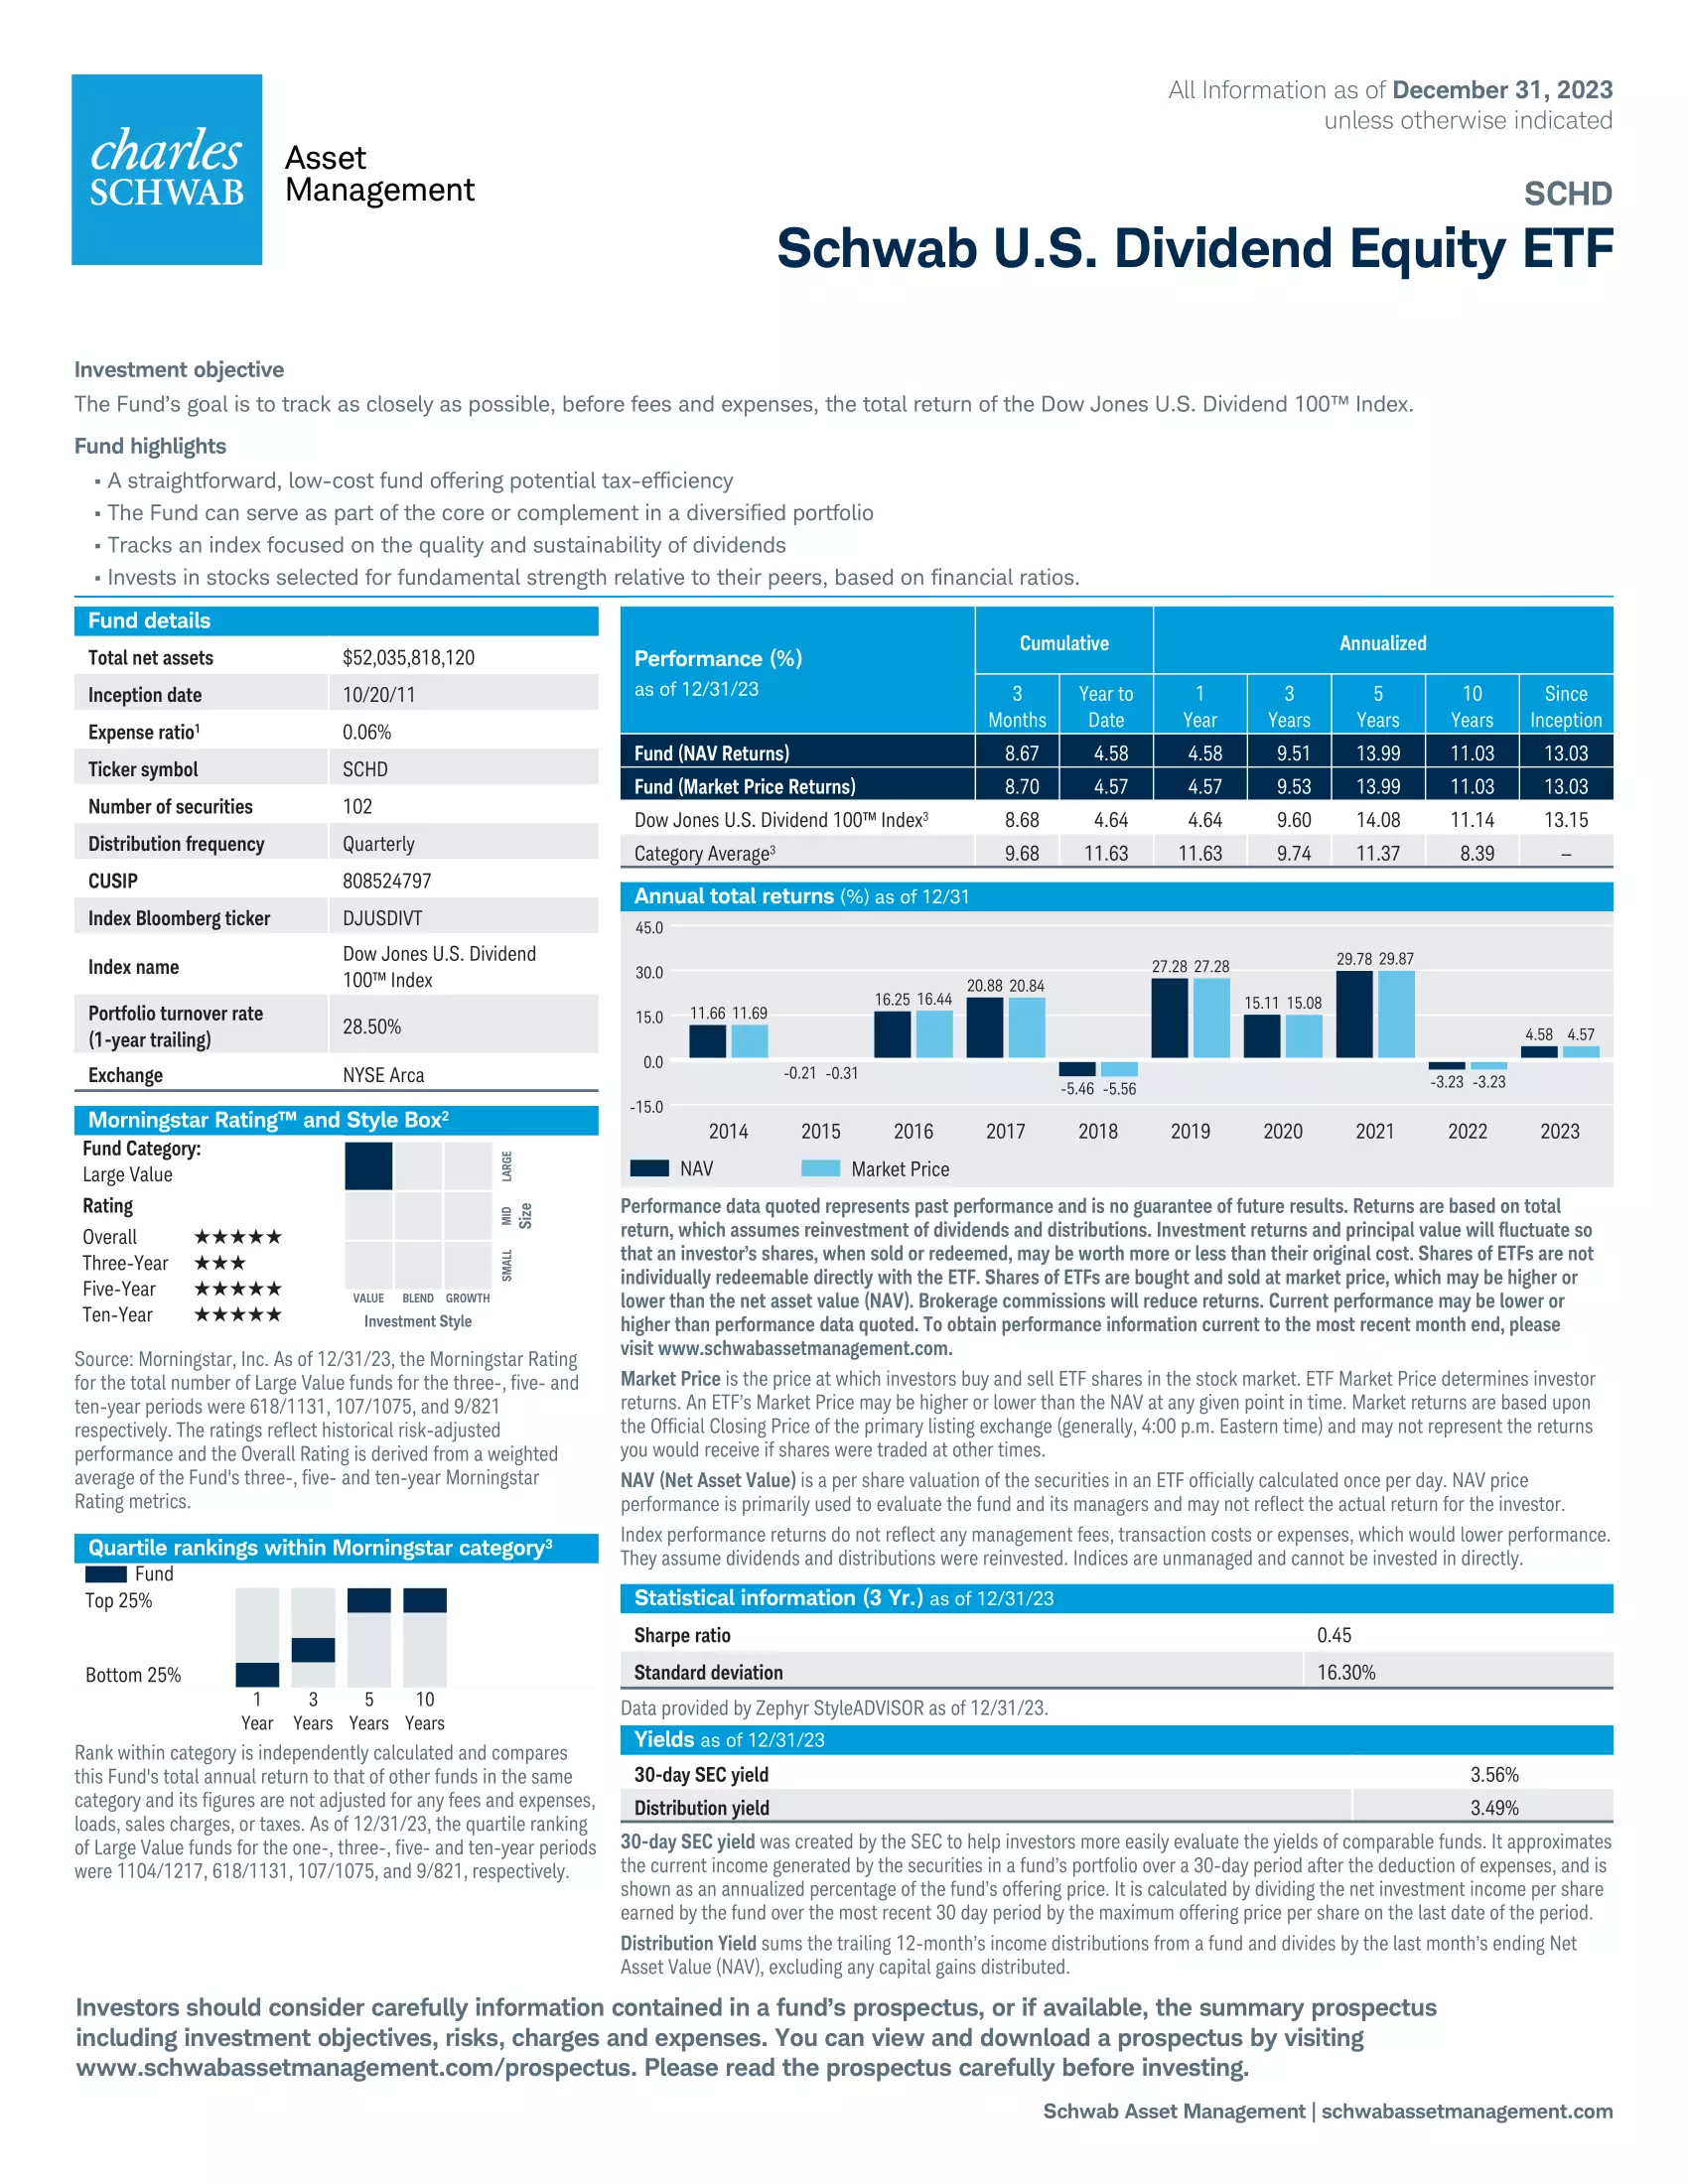 SCHD: Schwab U.S. Dividend Equity ETF